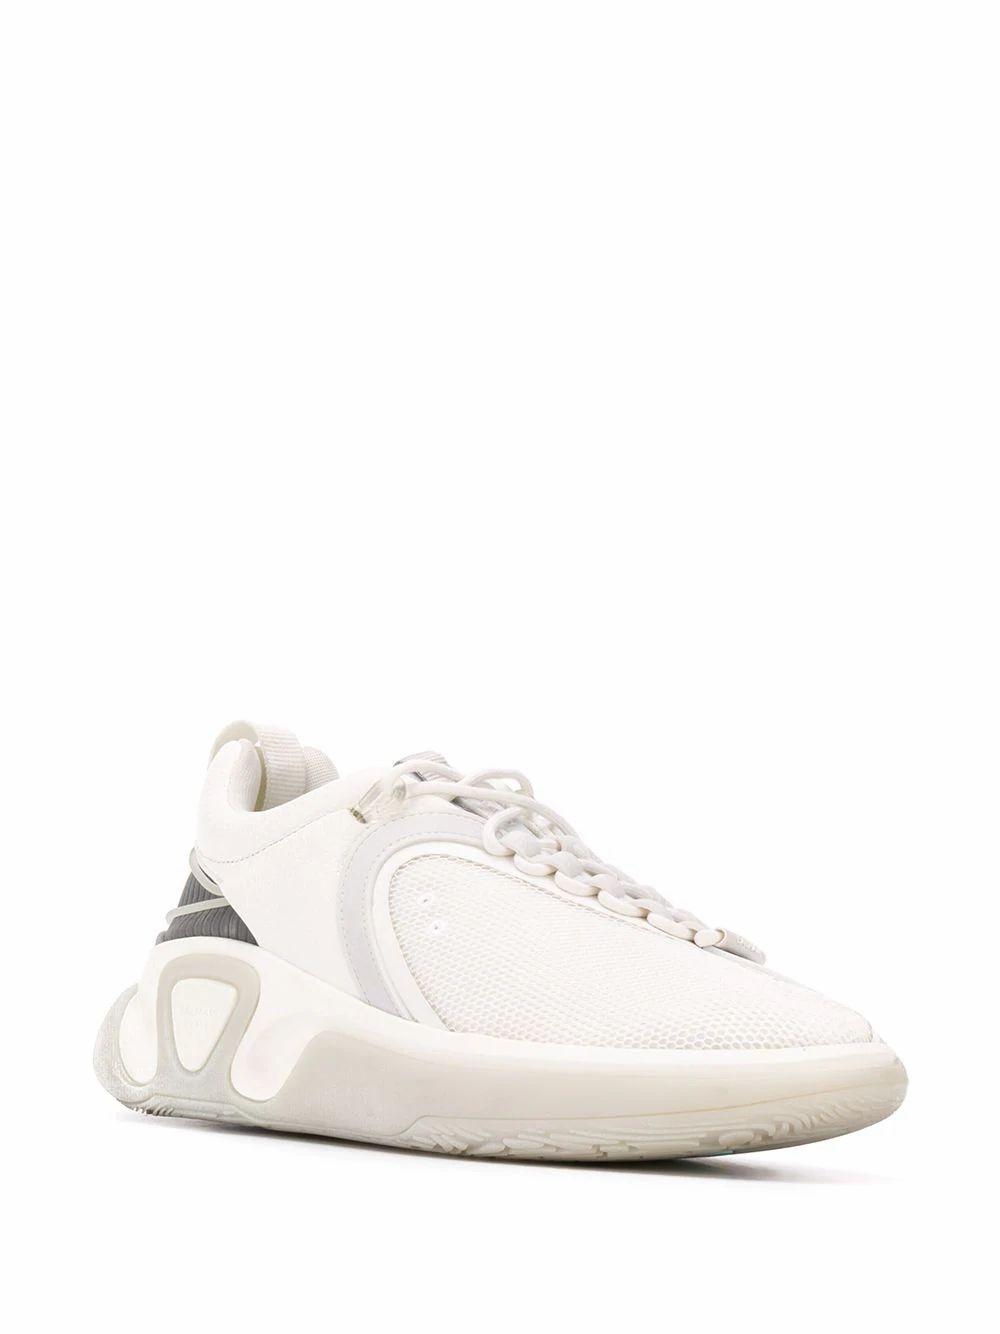 Balmain Polyester Sneakers in White for Men - Lyst